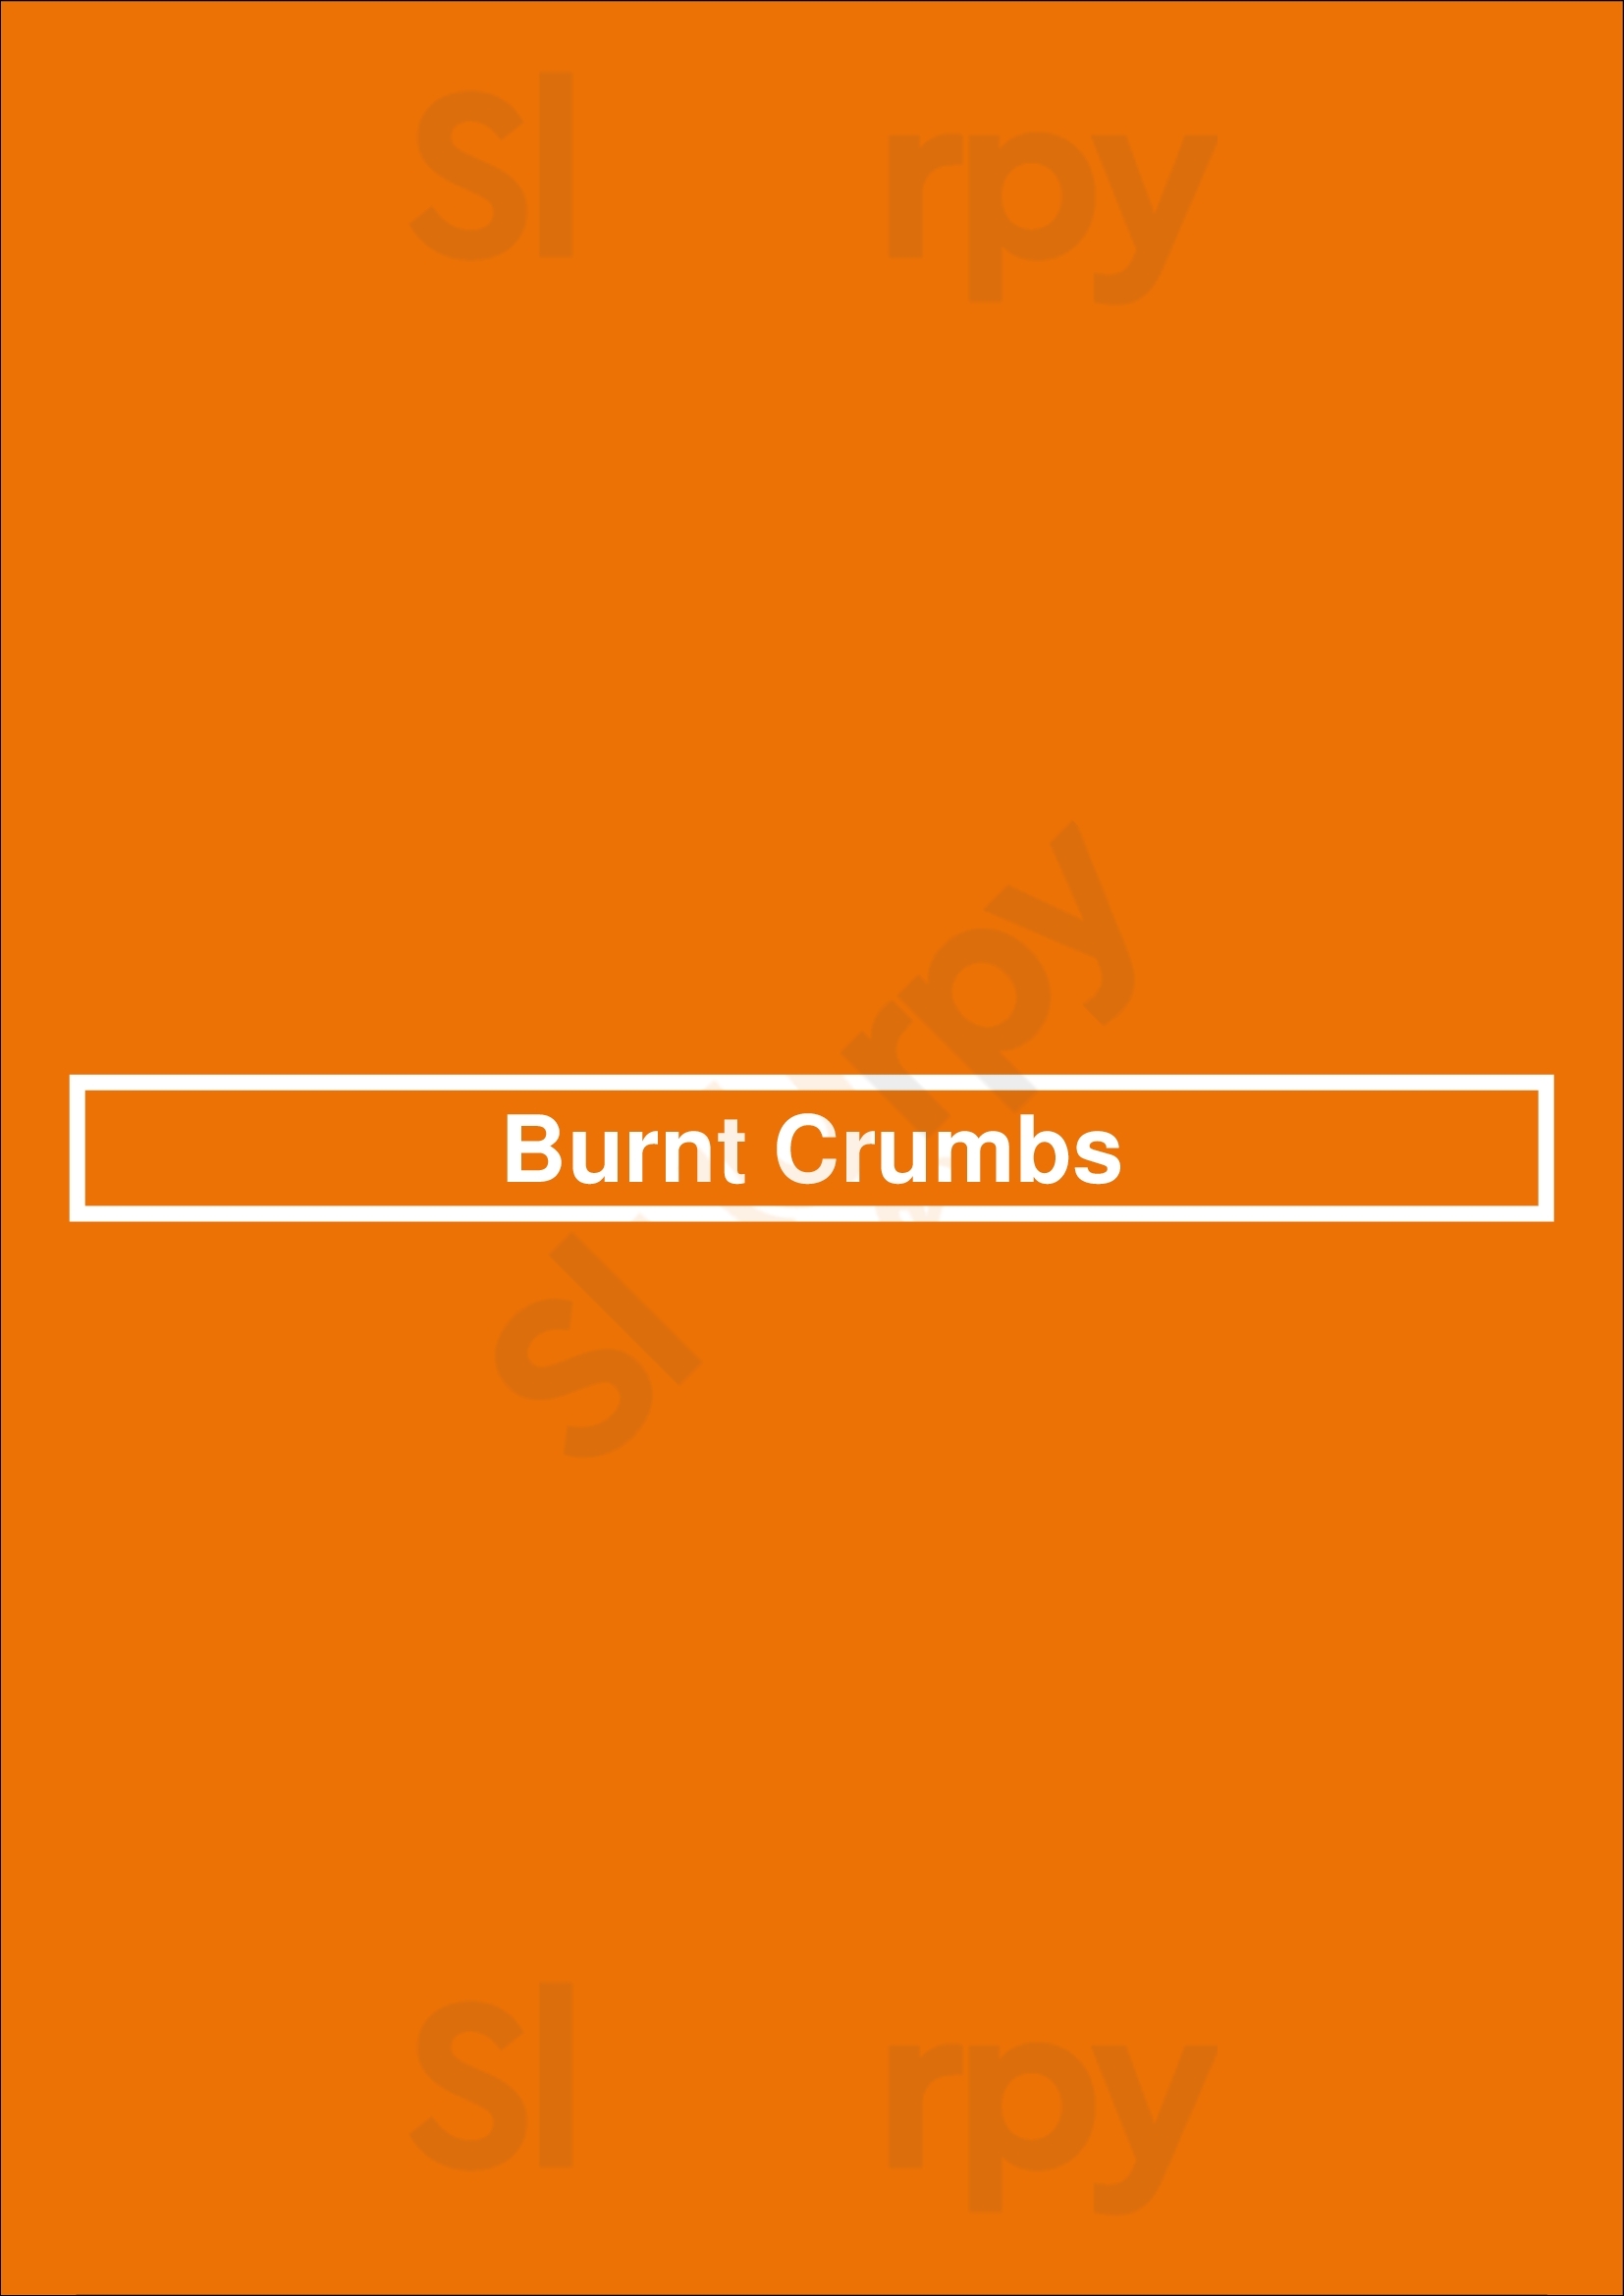 Burnt Crumbs Huntington Beach Menu - 1